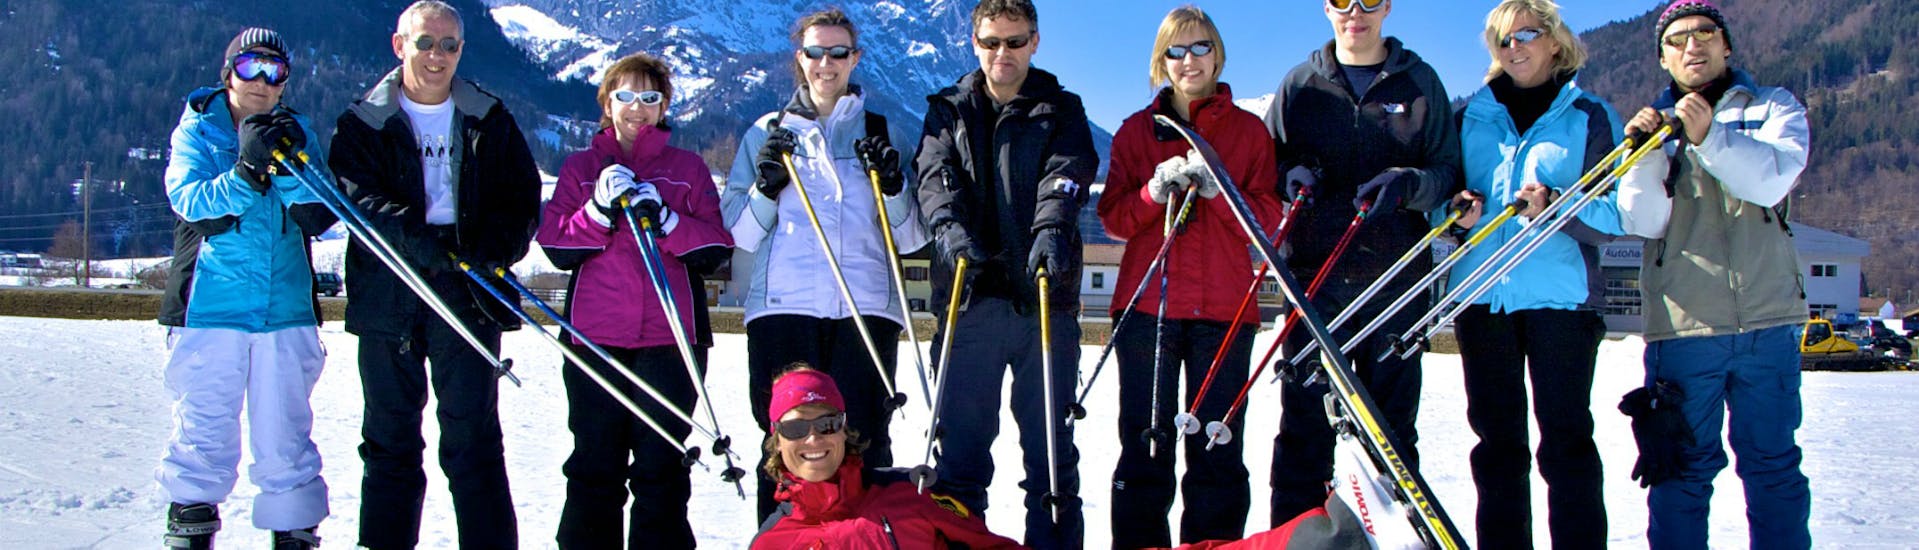 Adult Ski Lessons for Beginners with Ski School Ski Total Kirchdorf - Hero image